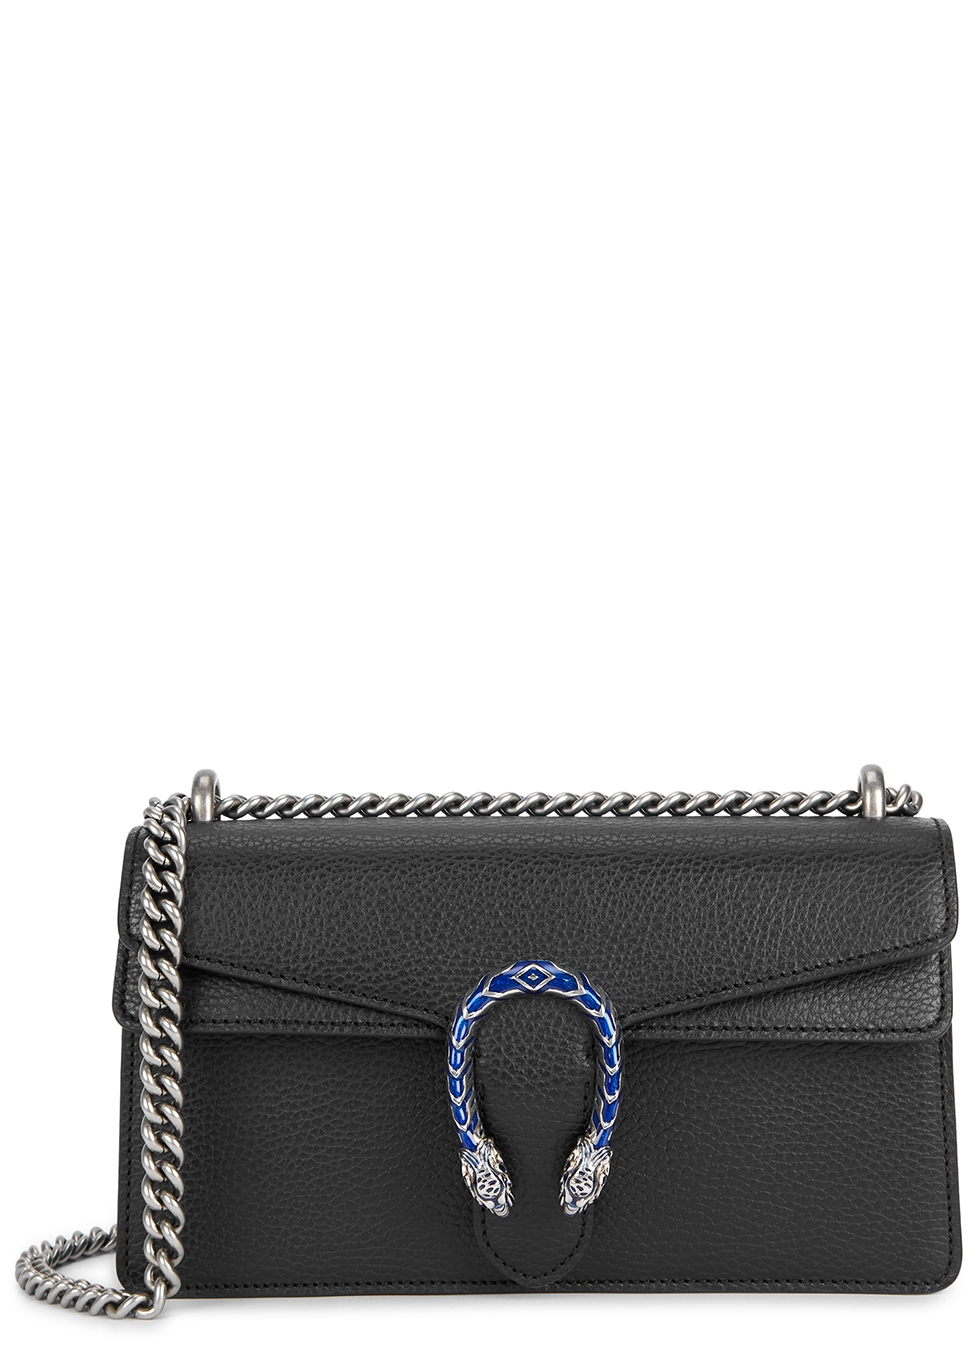 Gucci Dionysus small black leather shoulder bag - Harvey Nichols